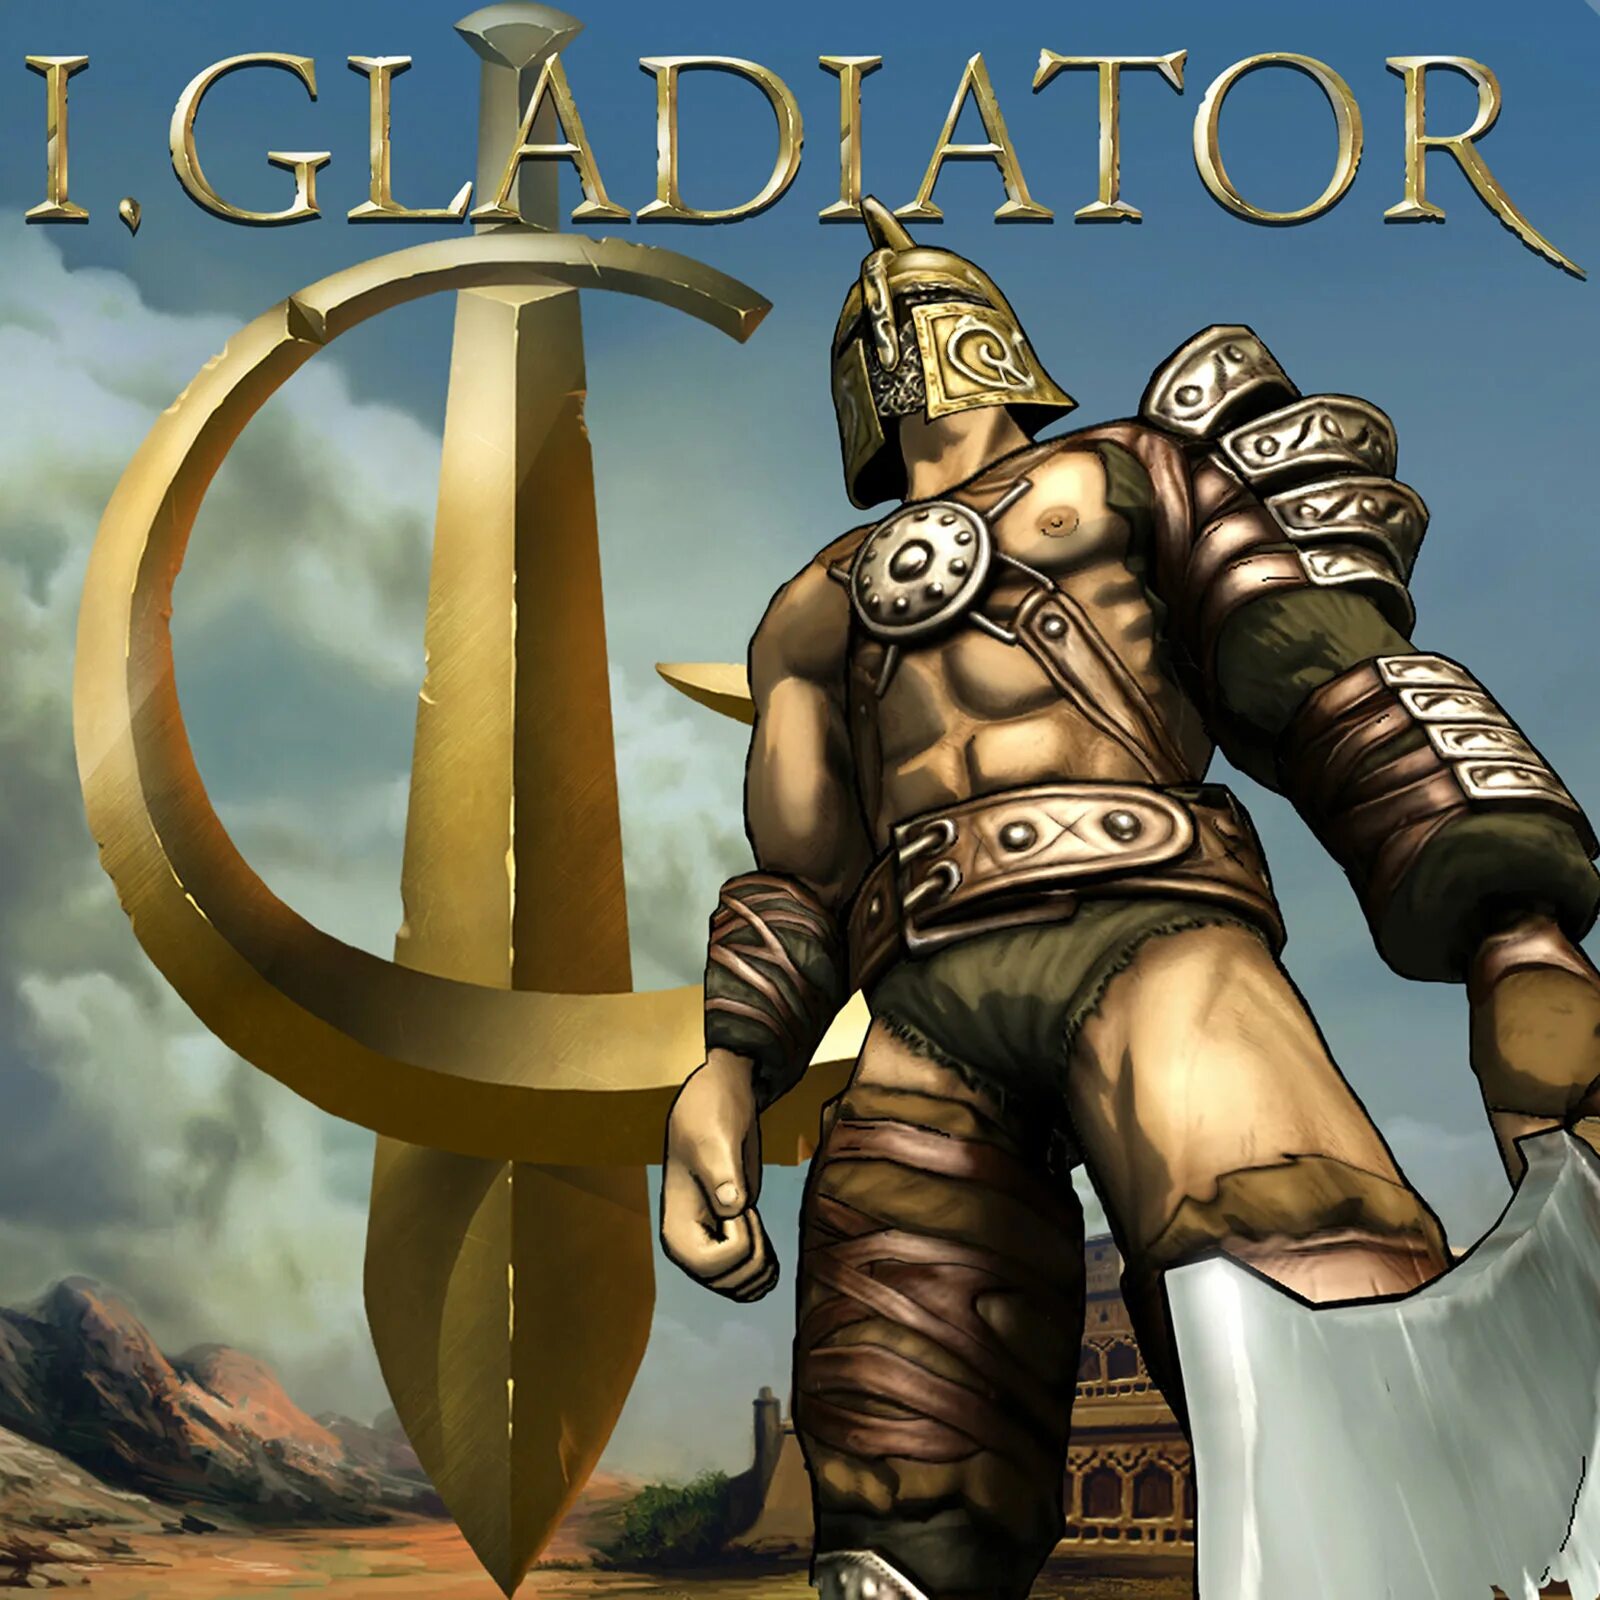 Игра i Gladiator. Я Гладиатор. OST Гладиатор. OST "Gladiator".